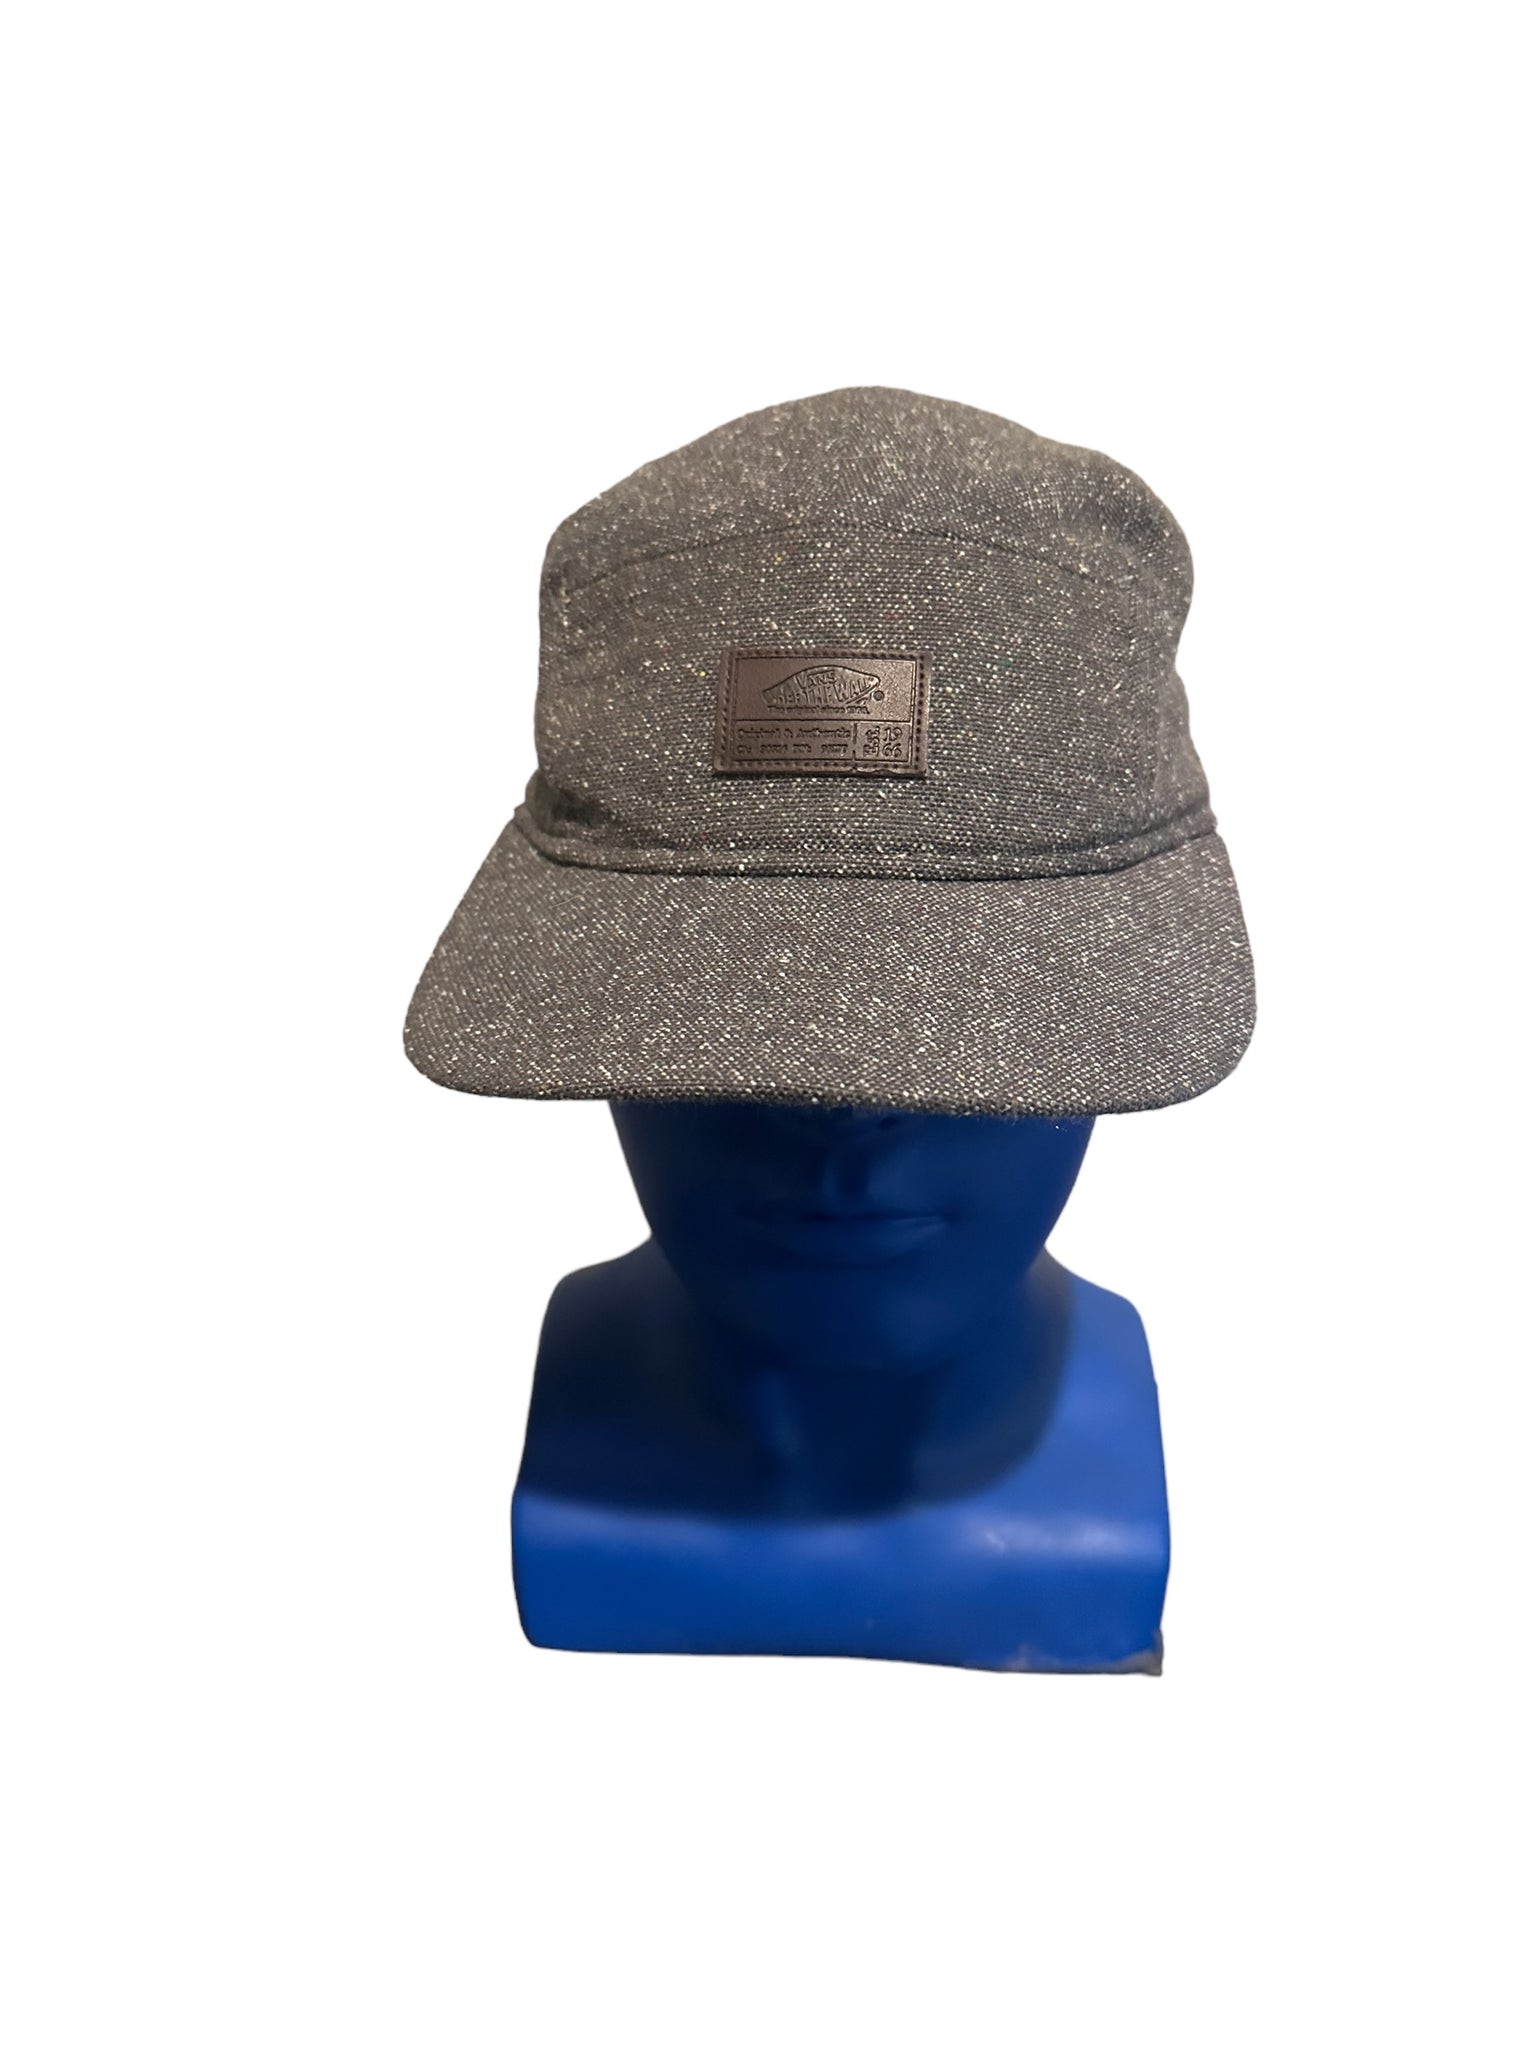 vans leather patch gray 5 panel adjustable strap hat